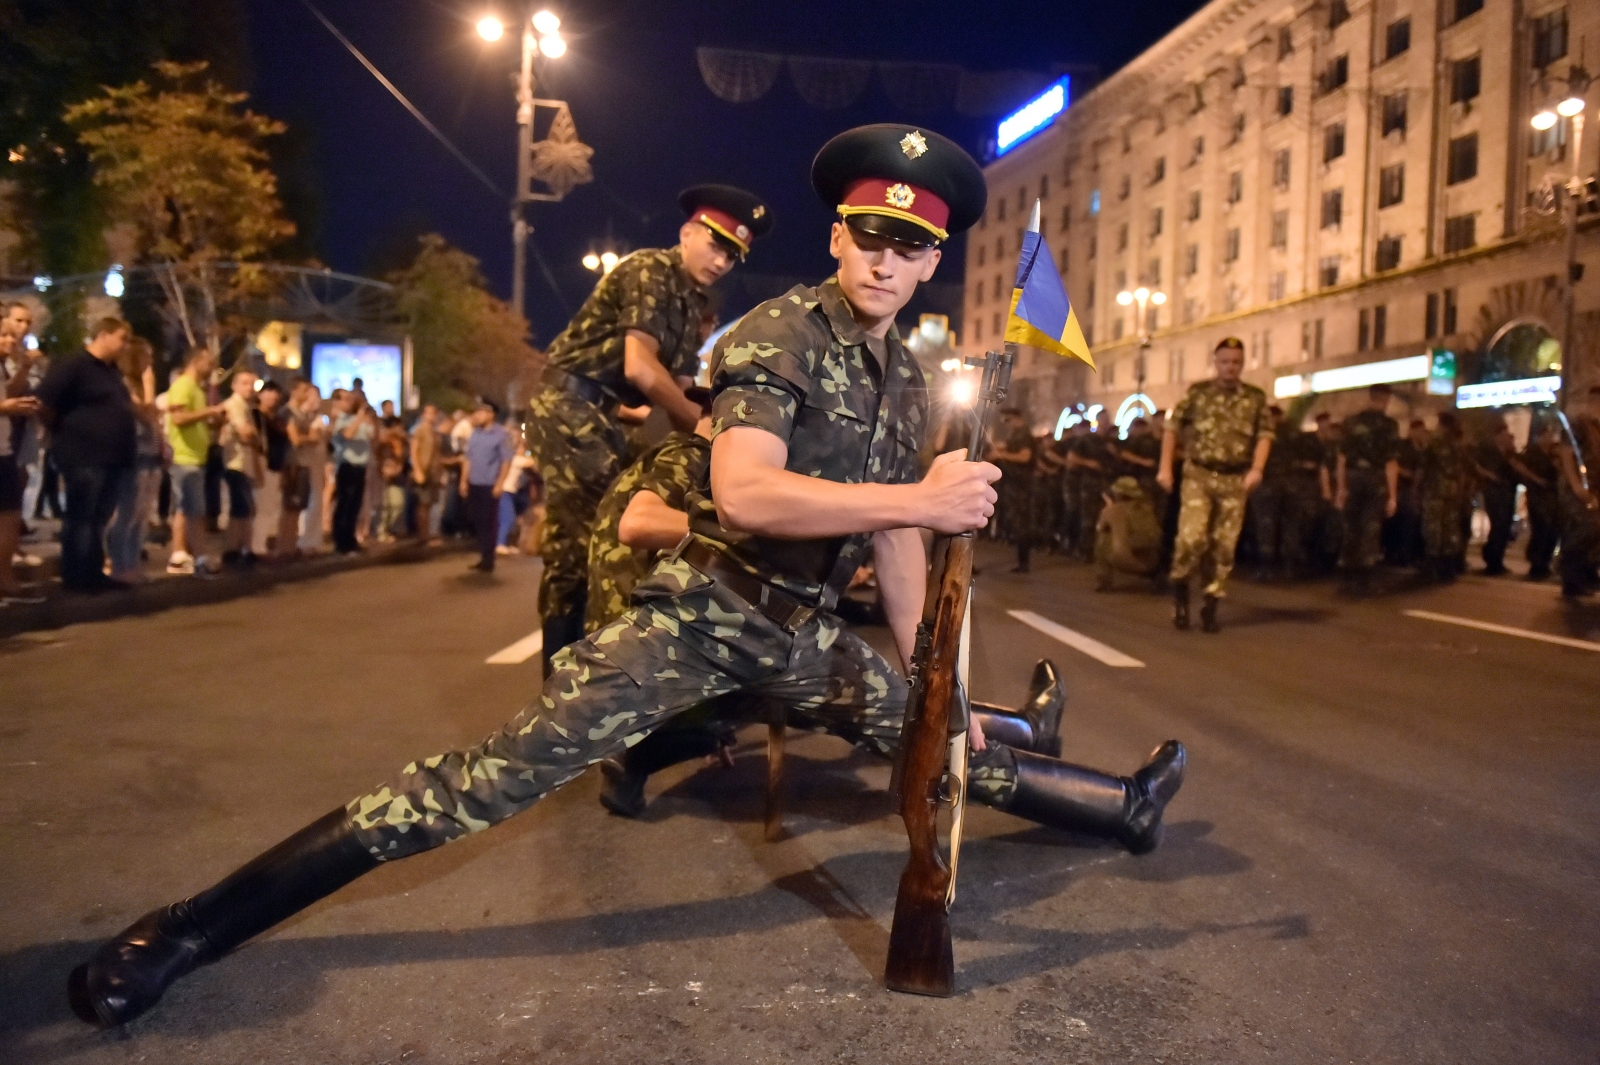 Ukraine Independence Day Parade warm up splits